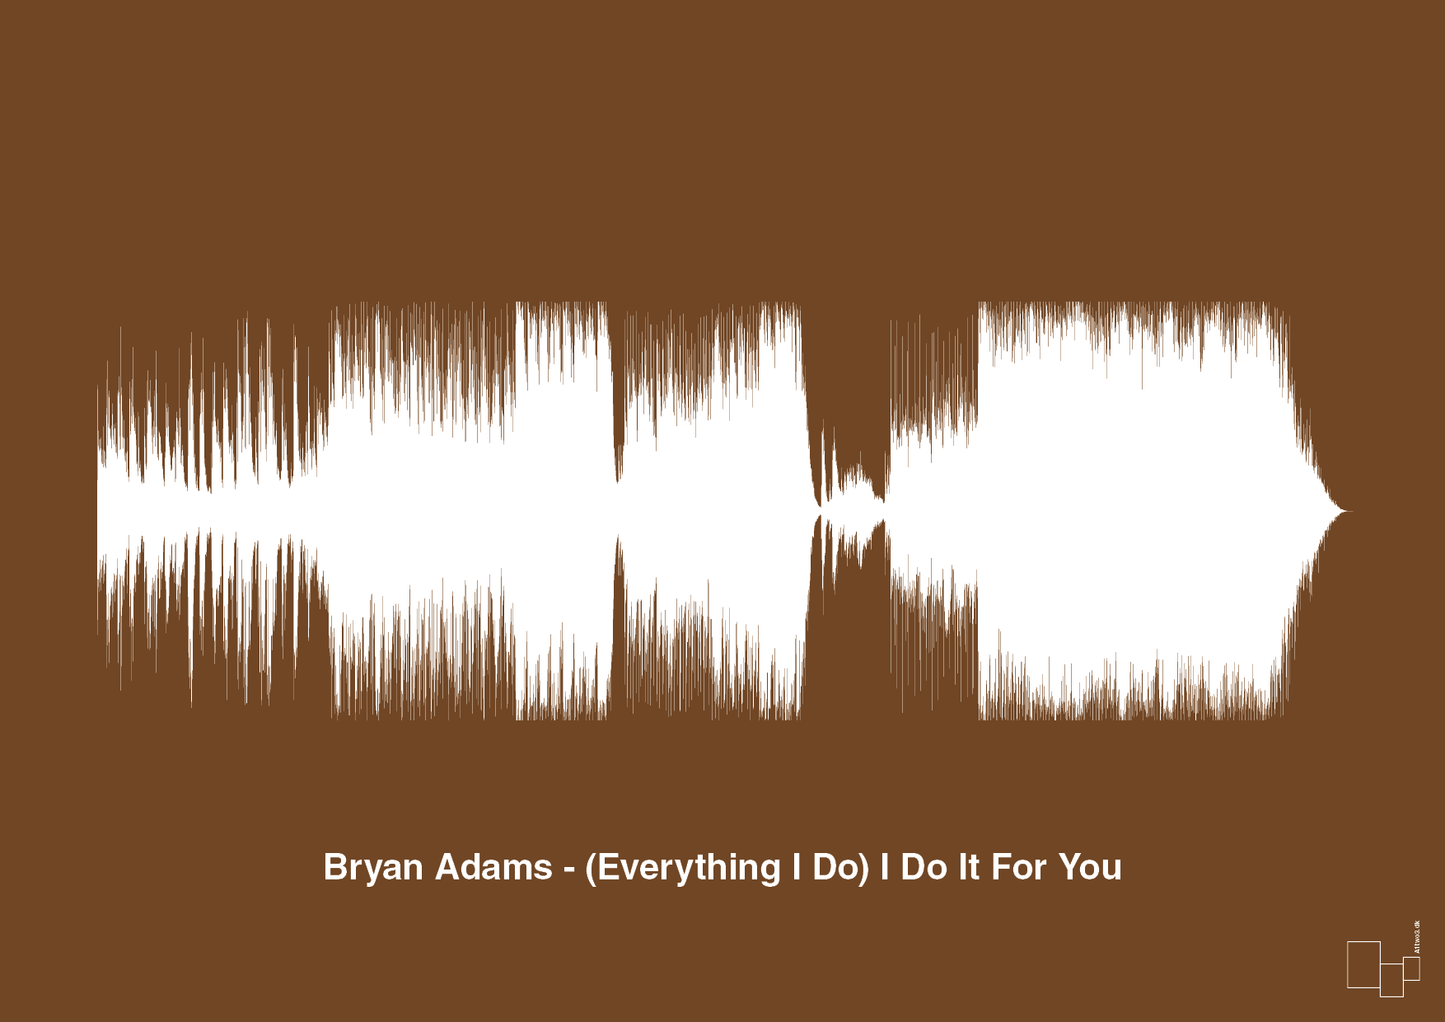 bryan adams - (everything i do) i do it for you - Plakat med Musik i Dark Brown